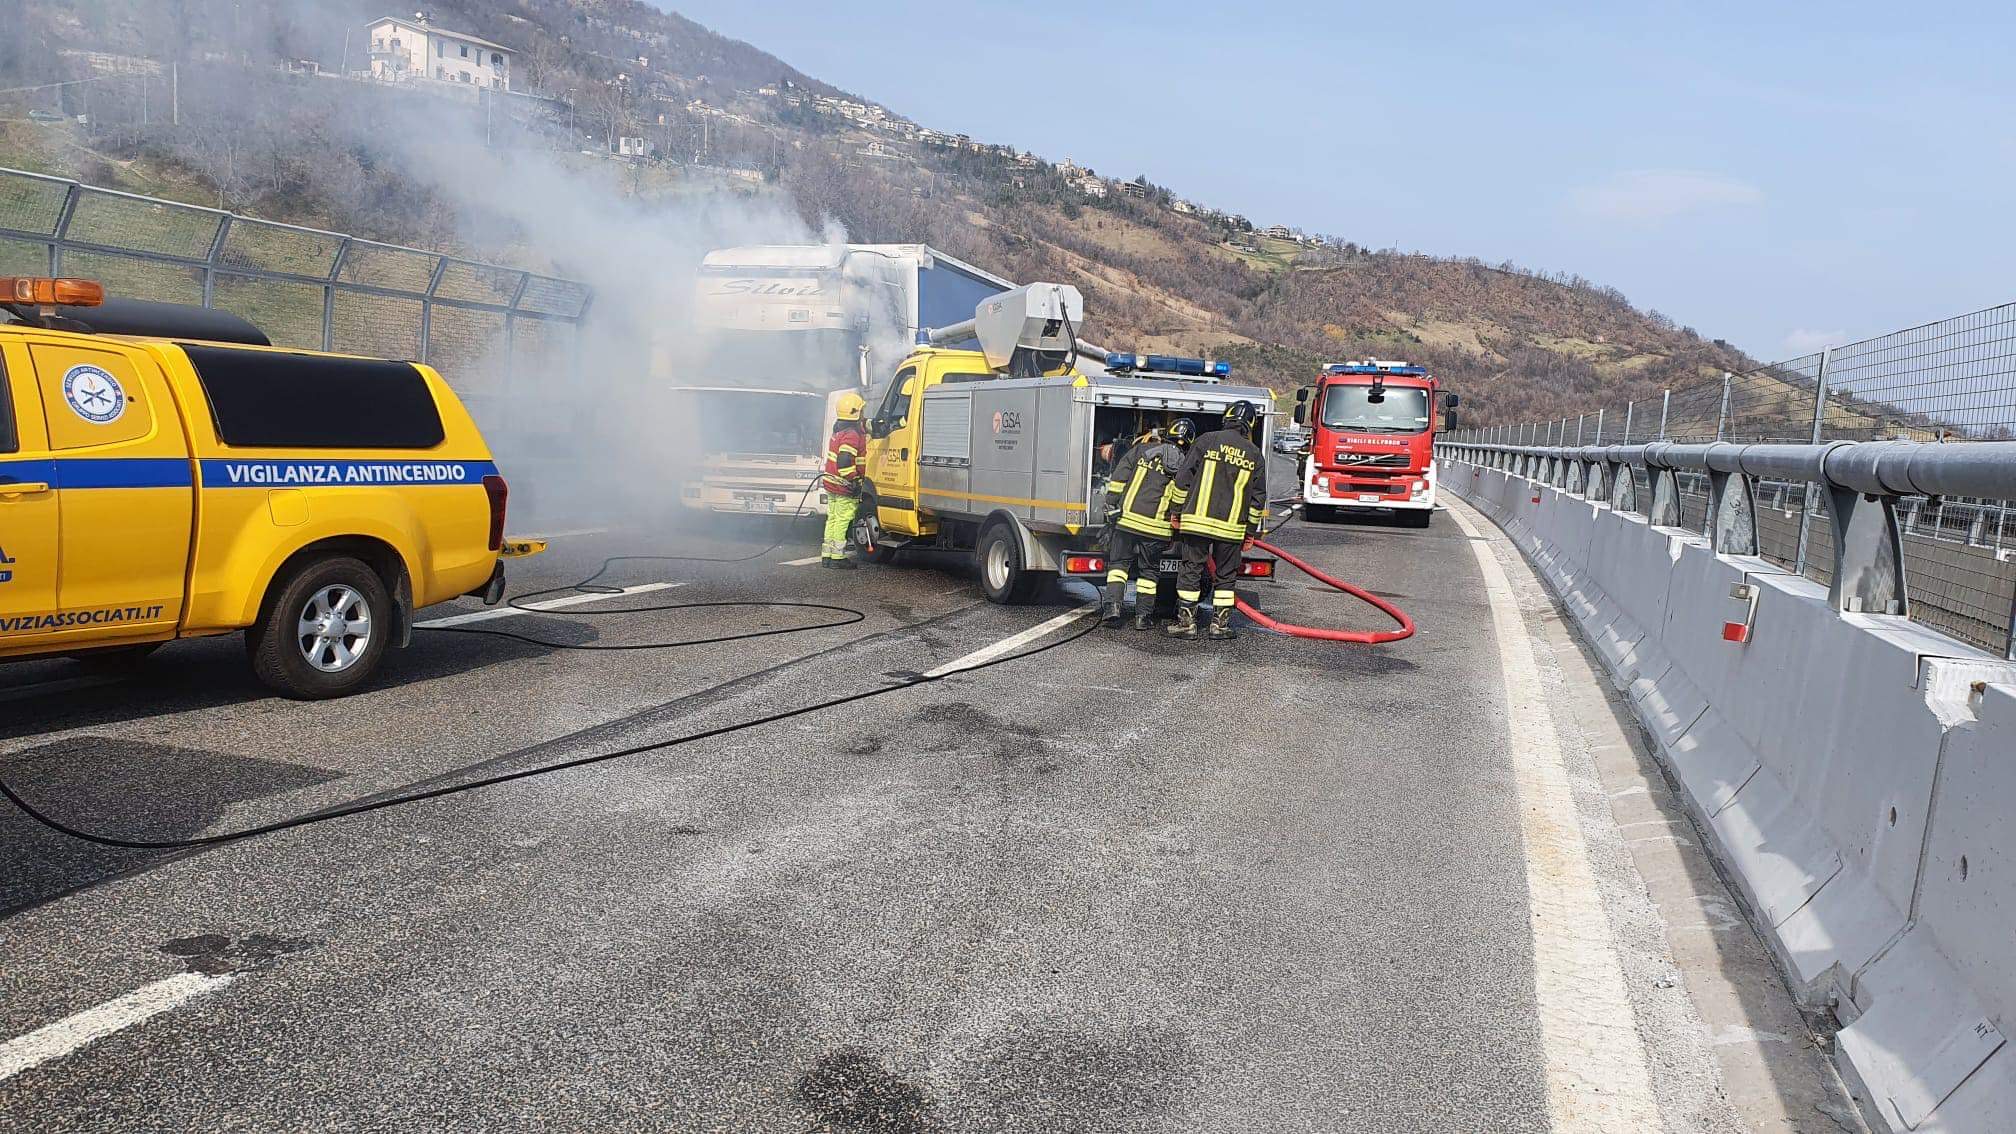 Camion a fuoco vicino Colledara, A24 chiusa al traffico FOTO